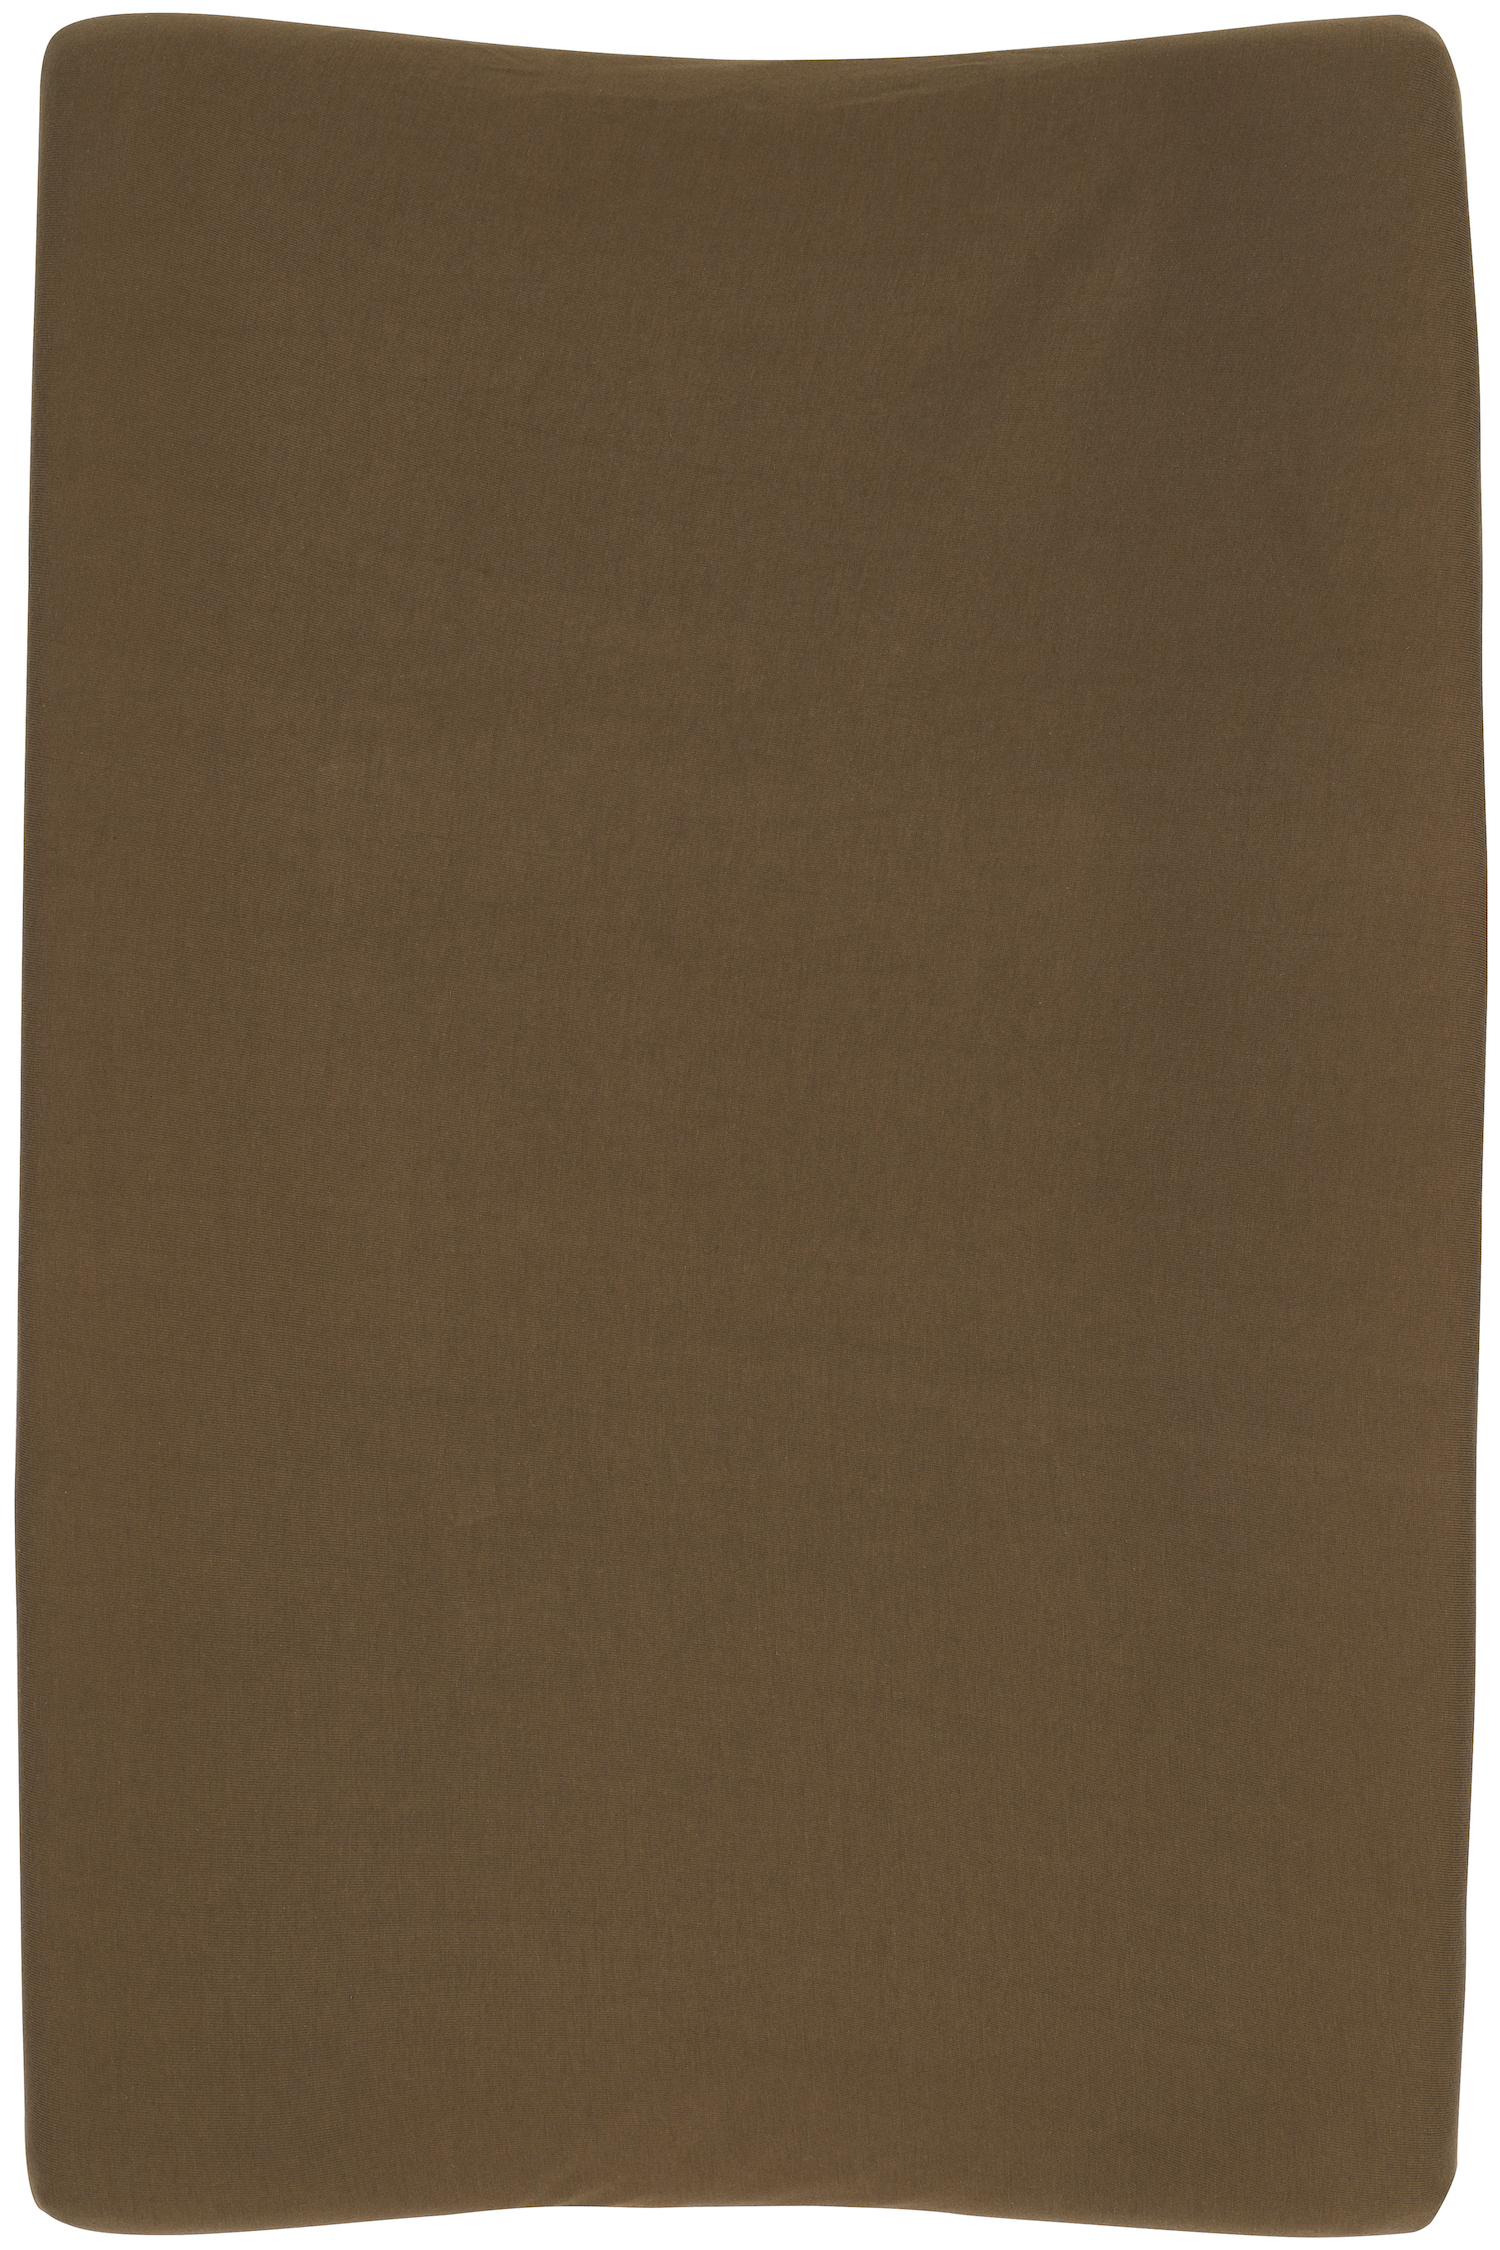 Aankleedkussenhoes Basic Jersey 2-pack - Chocolate - 50x70cm